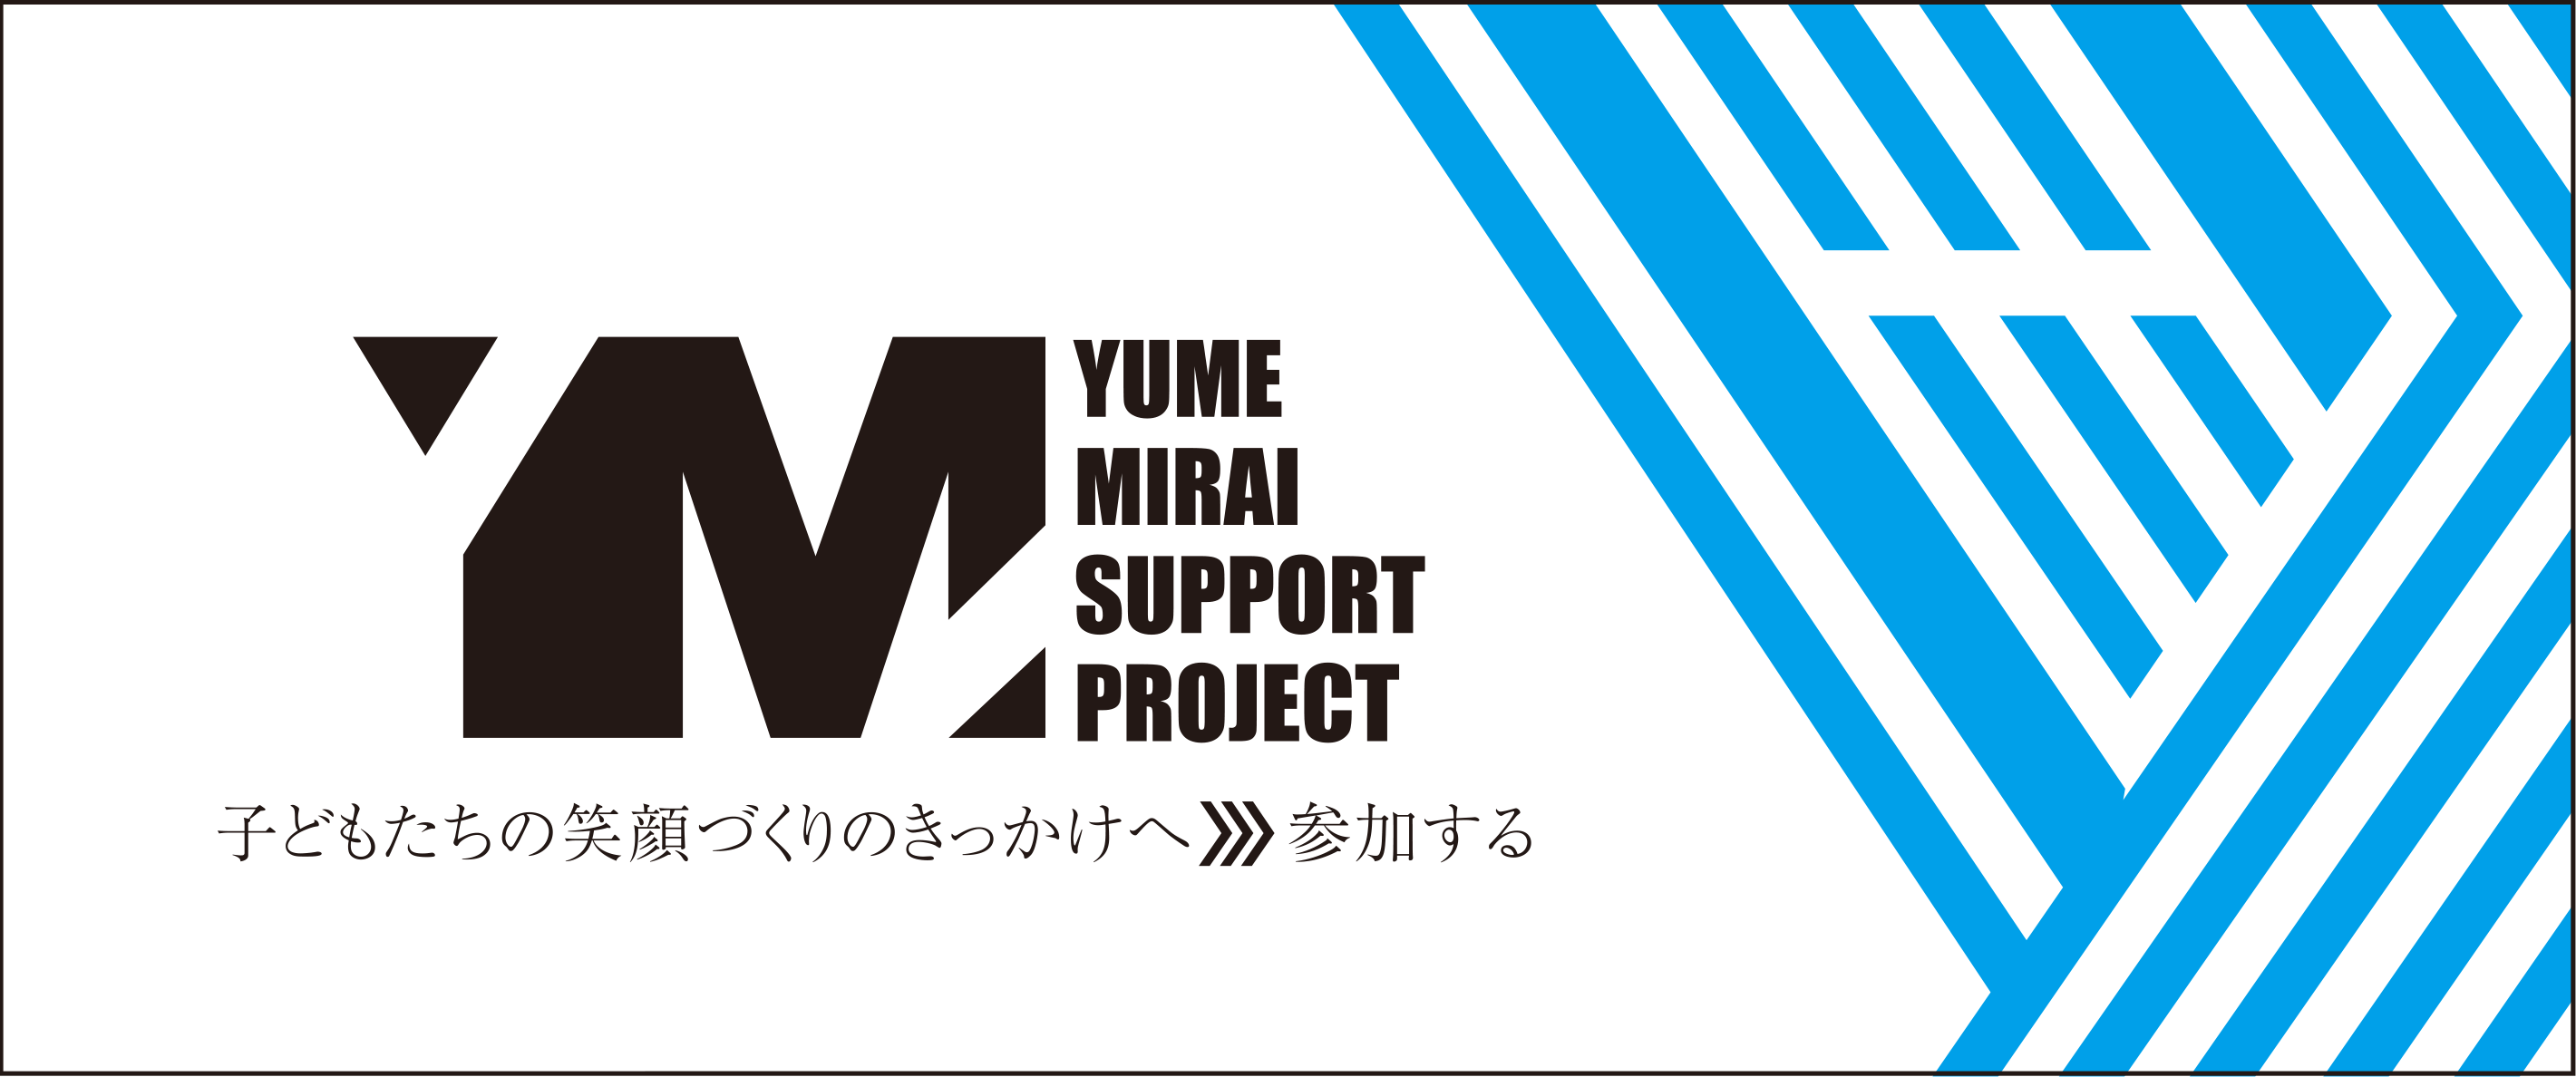 Yume Mirai Support Project